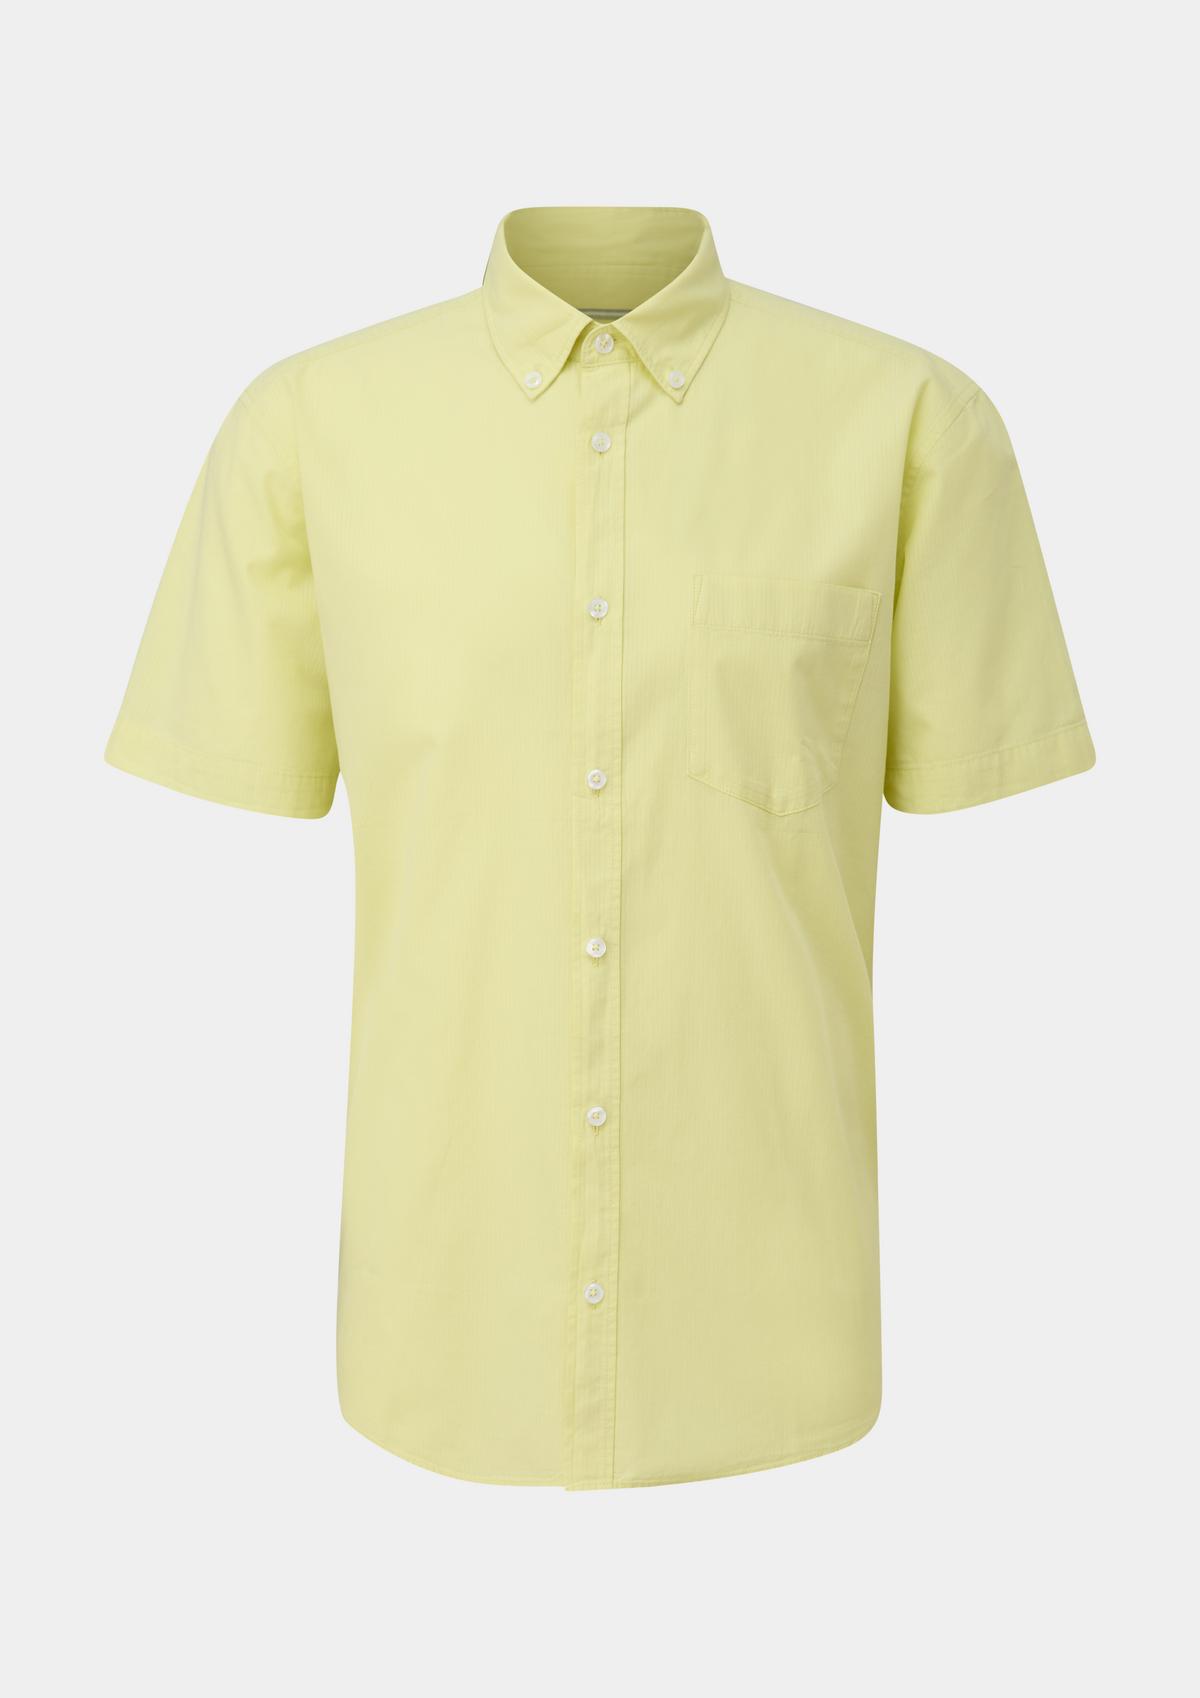 s.Oliver short sleeve cotton shirt